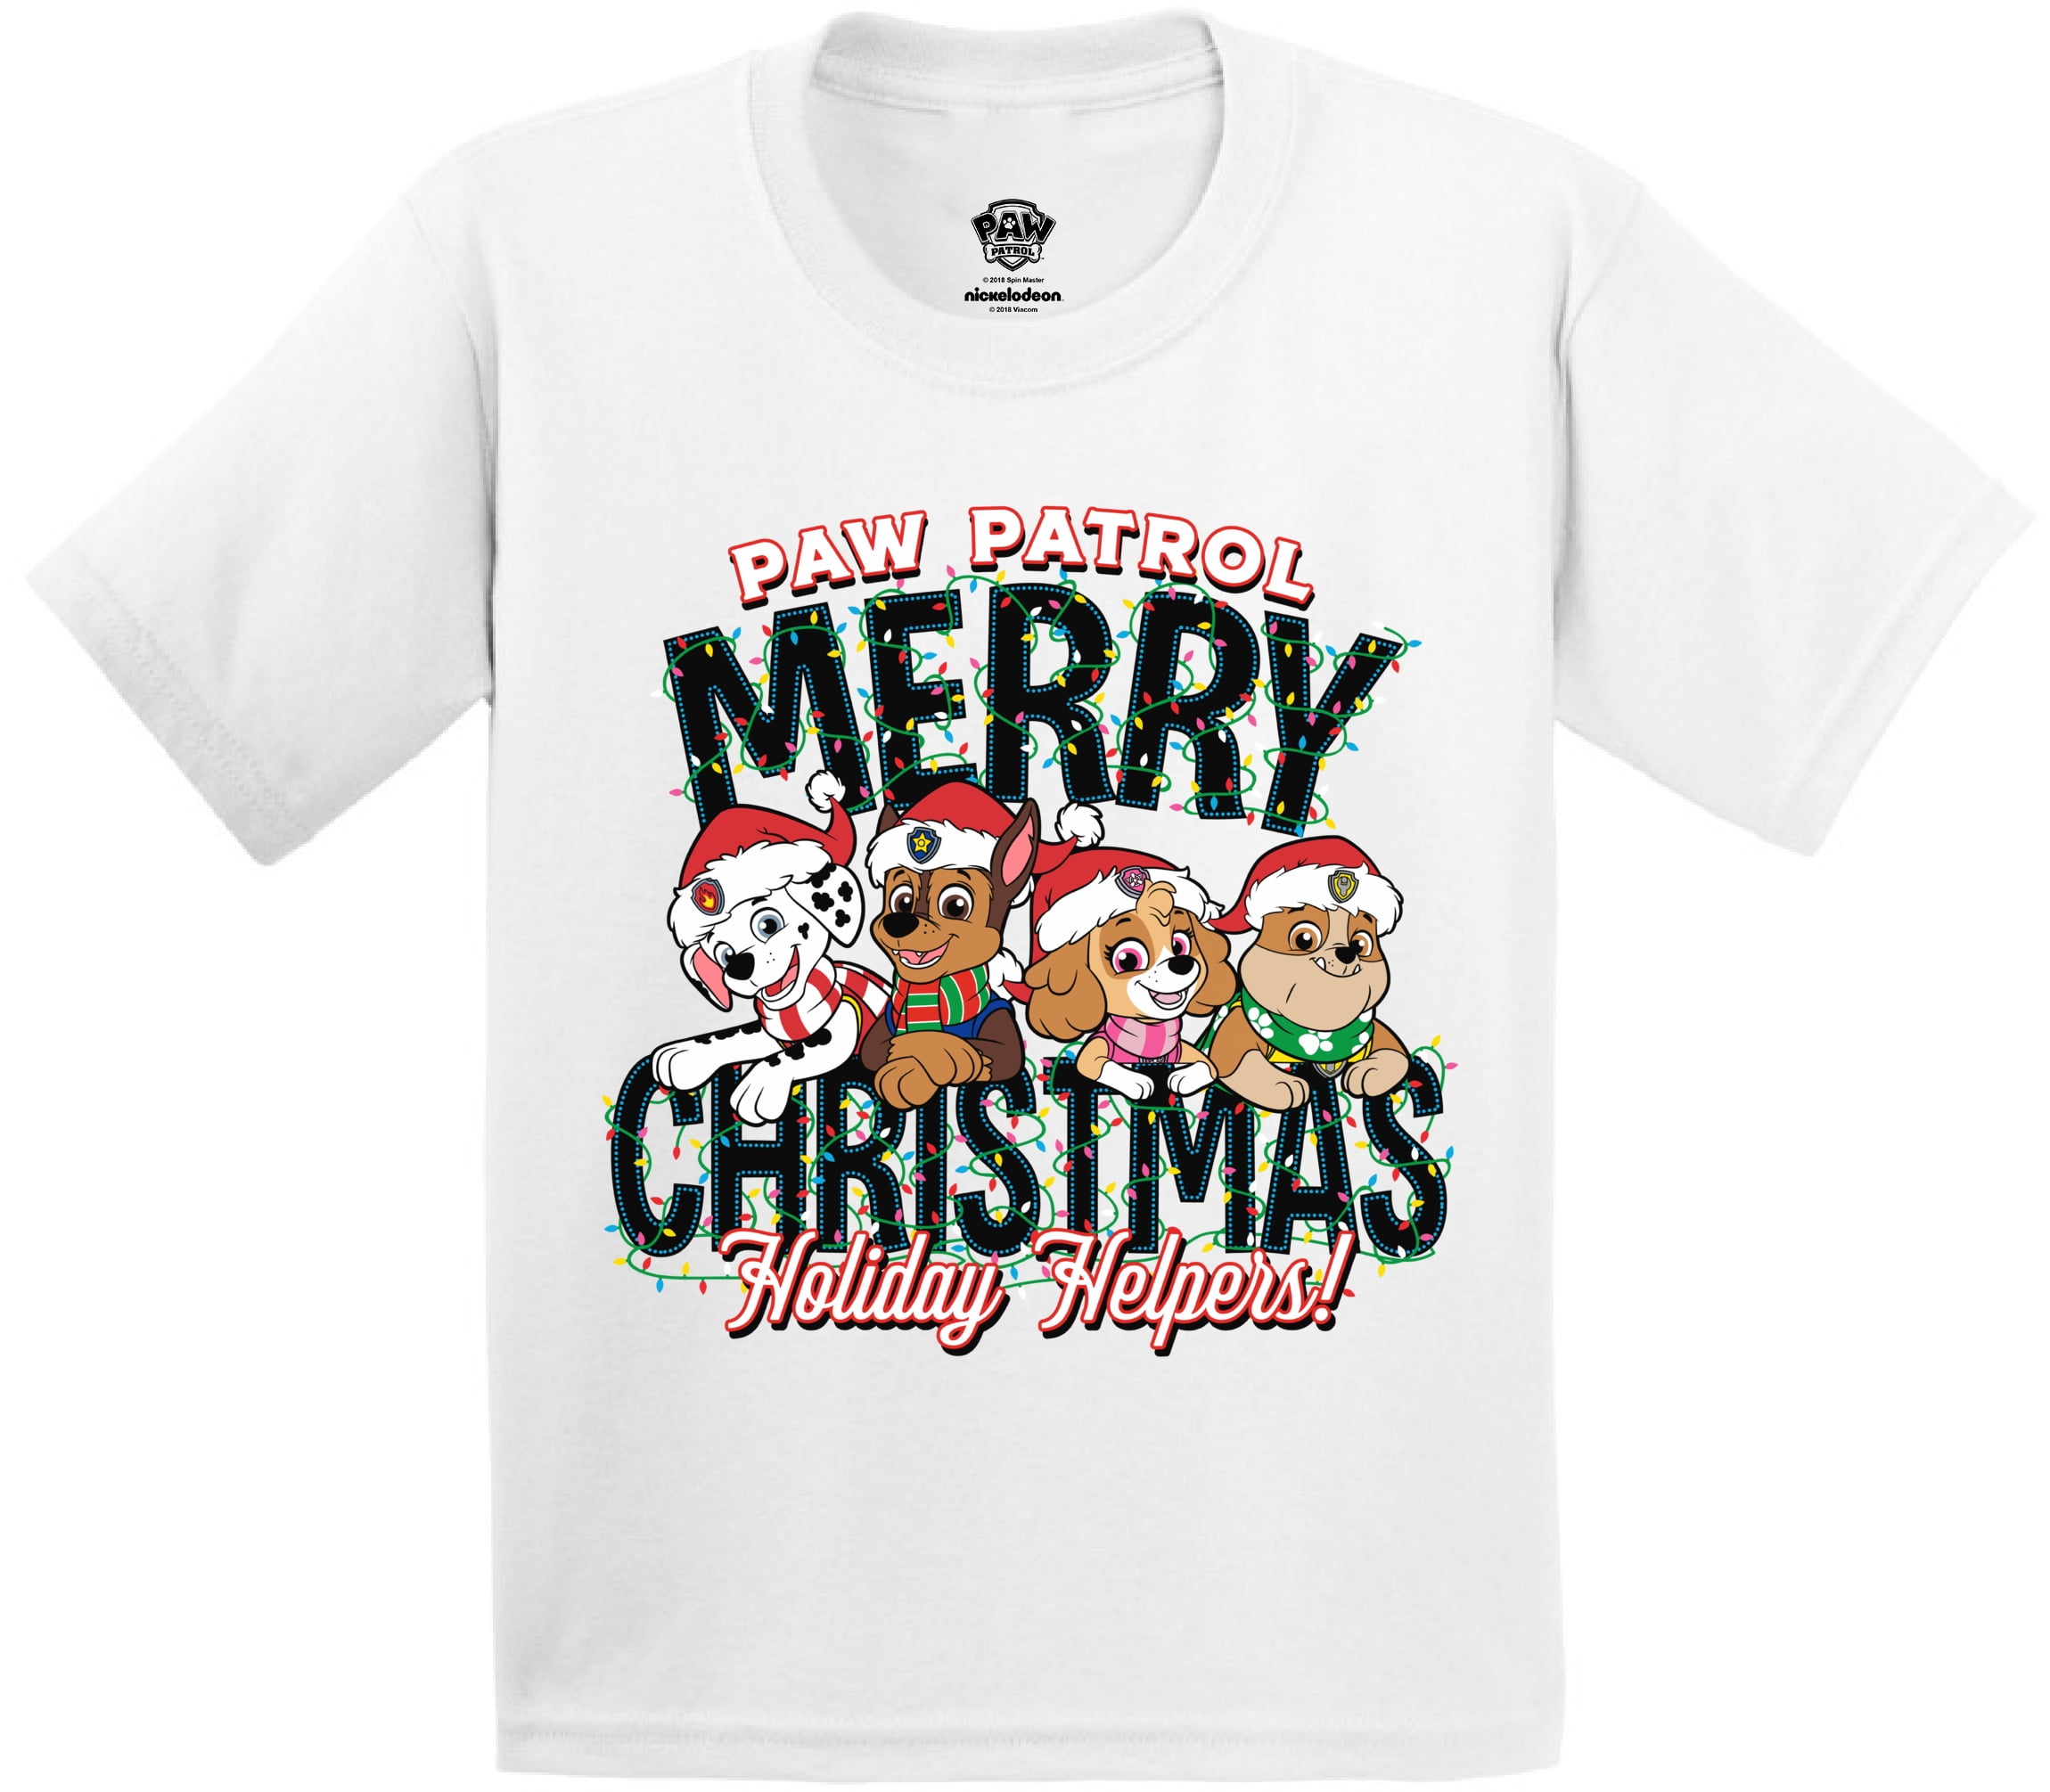 Awkward Styles Ugly Christmas Long Sleeve Shirt for Girls Boys Toddler Xmas Squad Dance Shirt